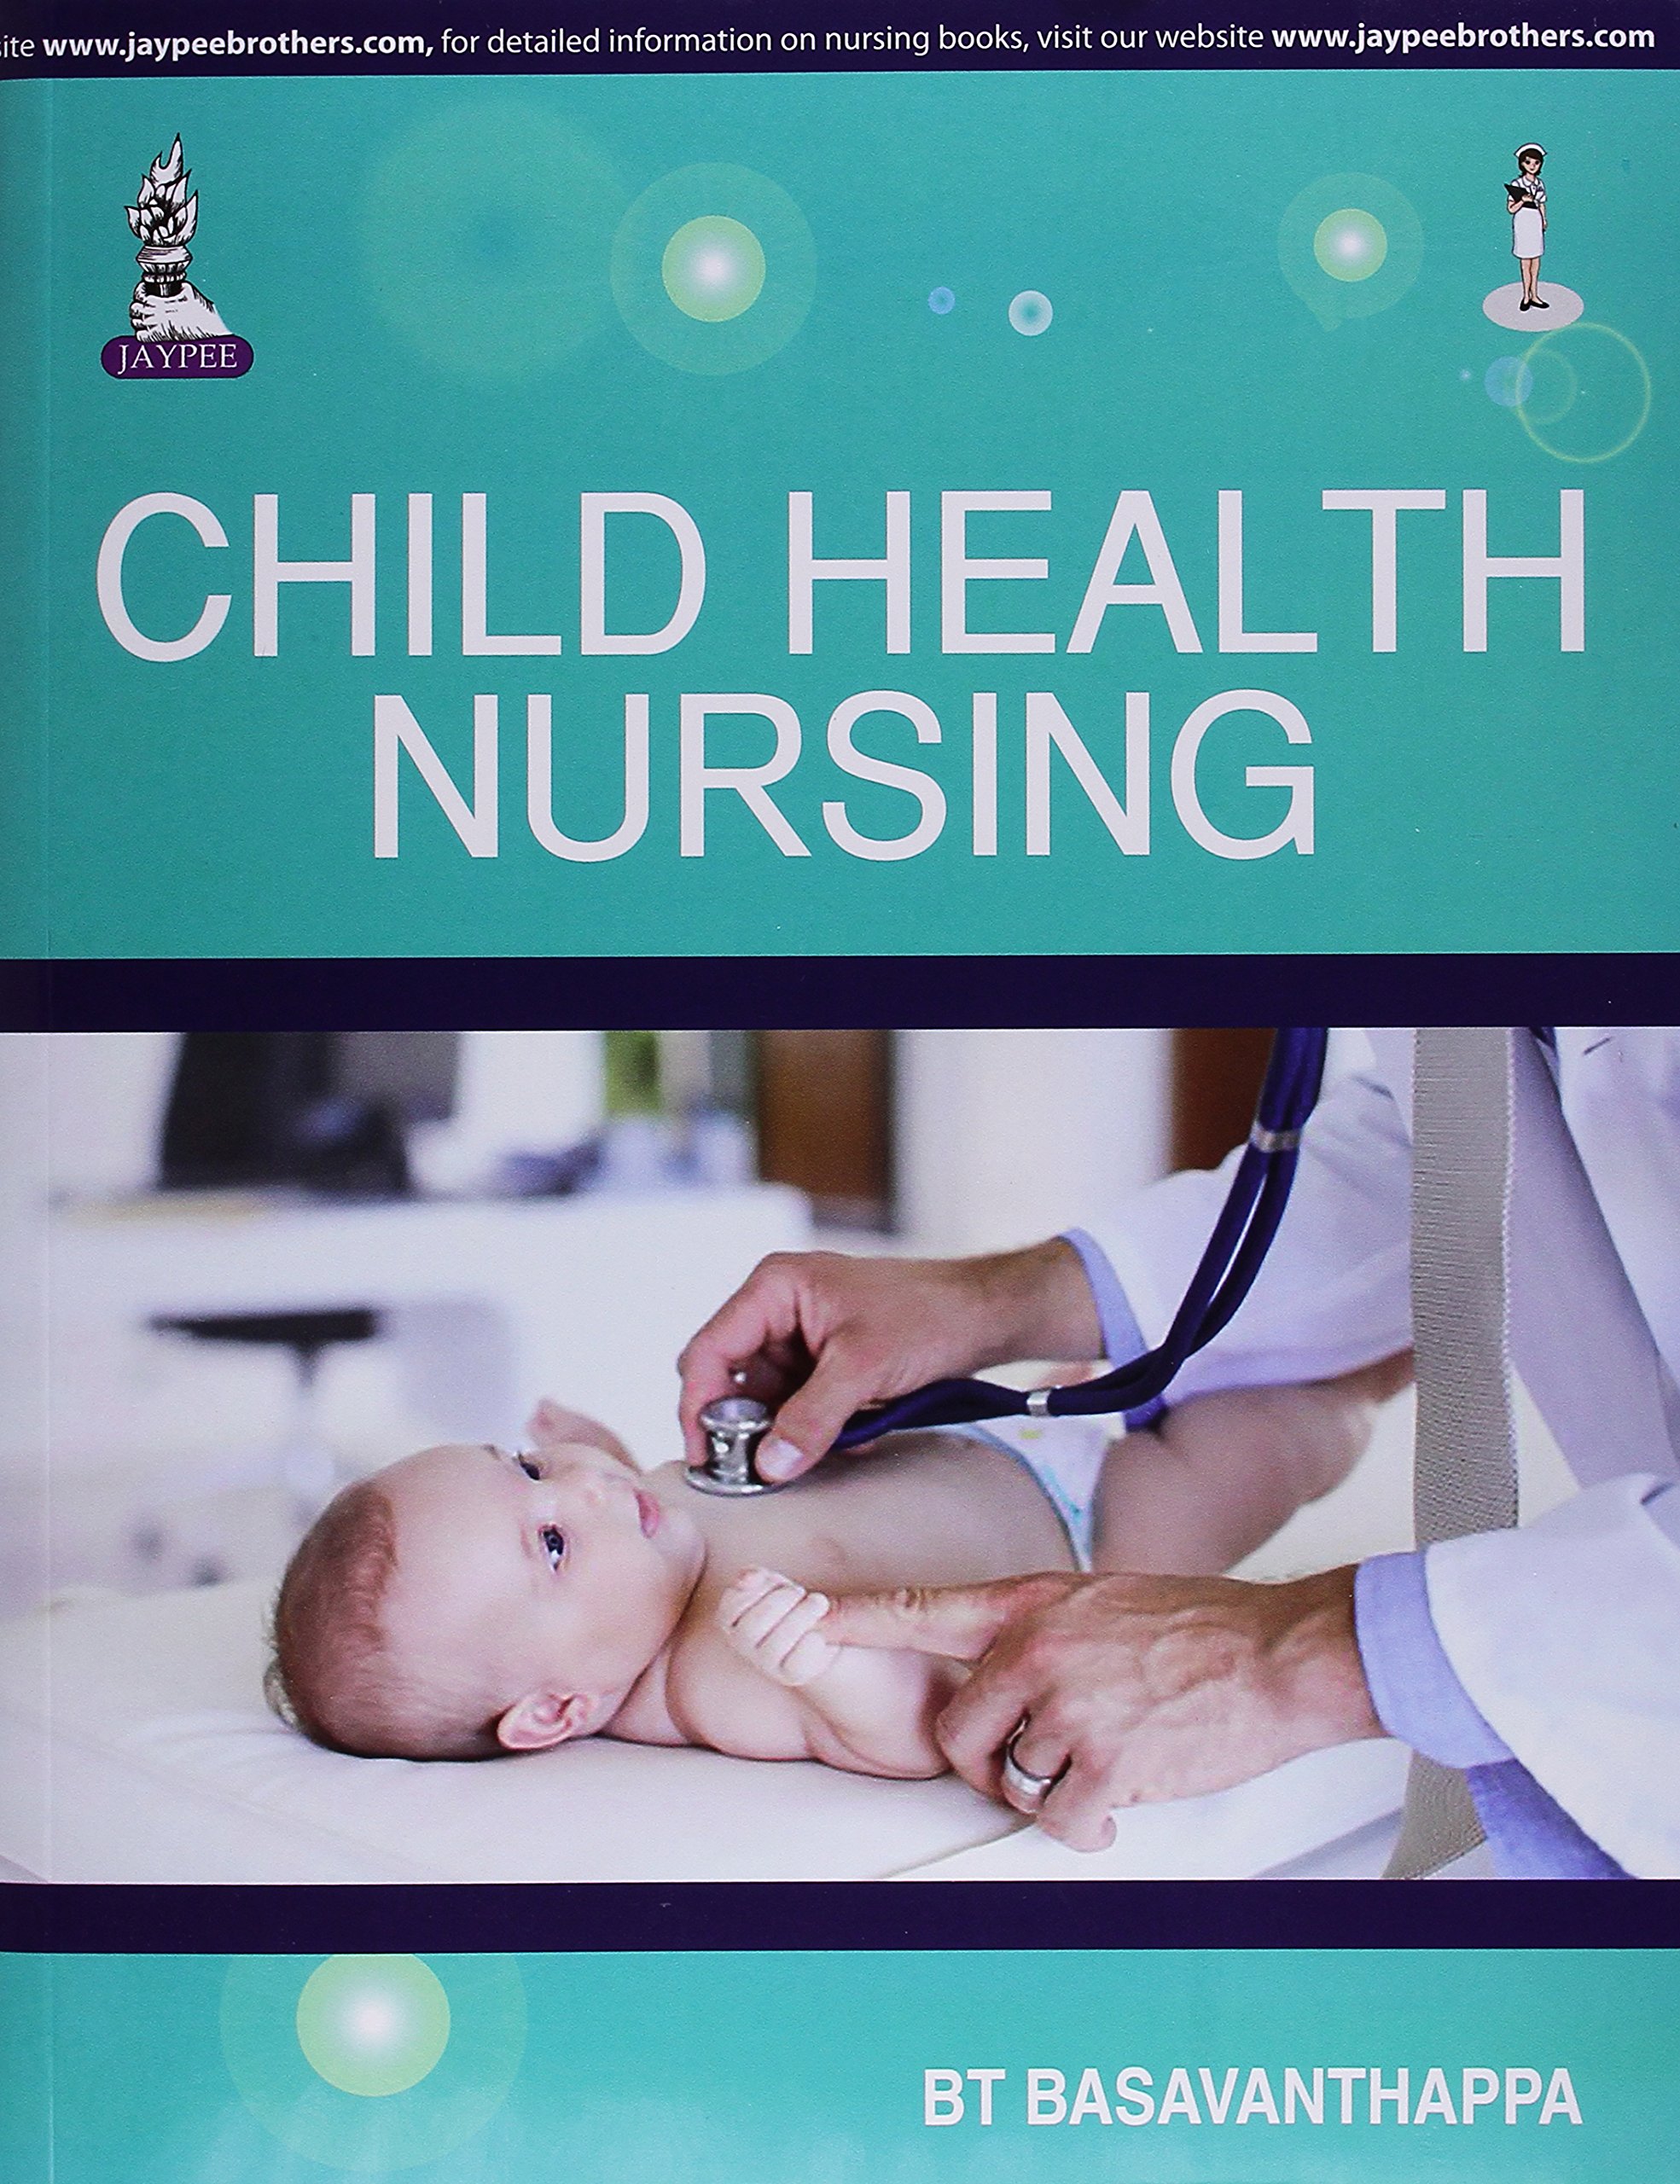 case presentation child health nursing slideshare